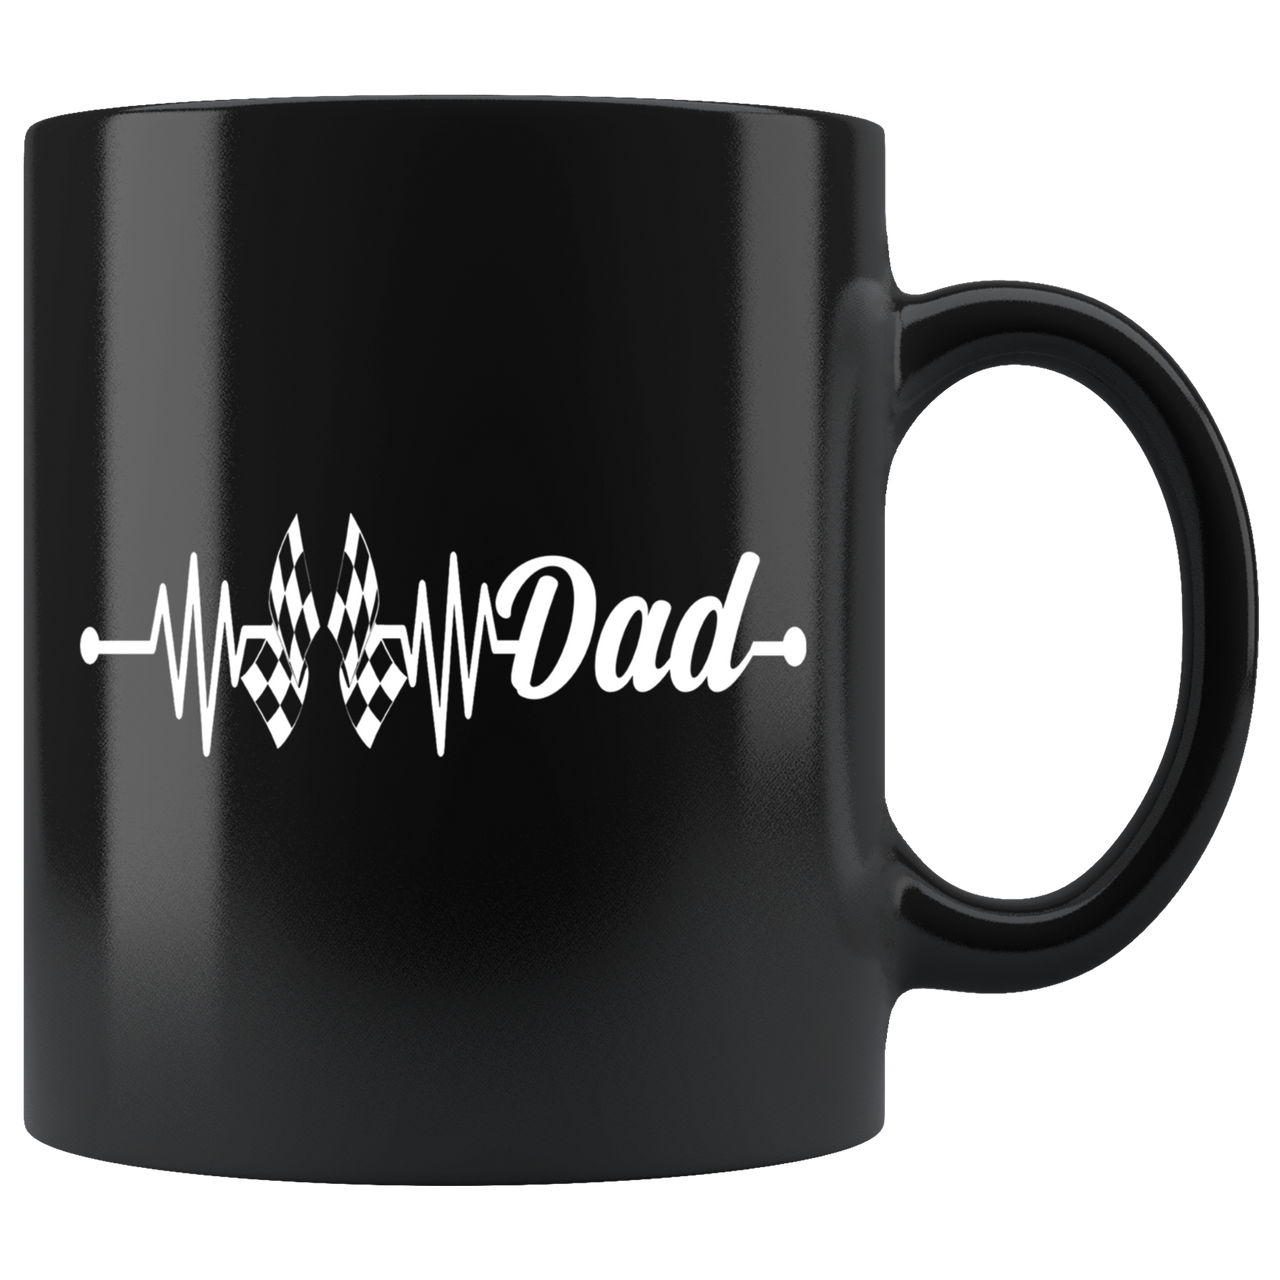 Racing Dad Heartbeat Mug!